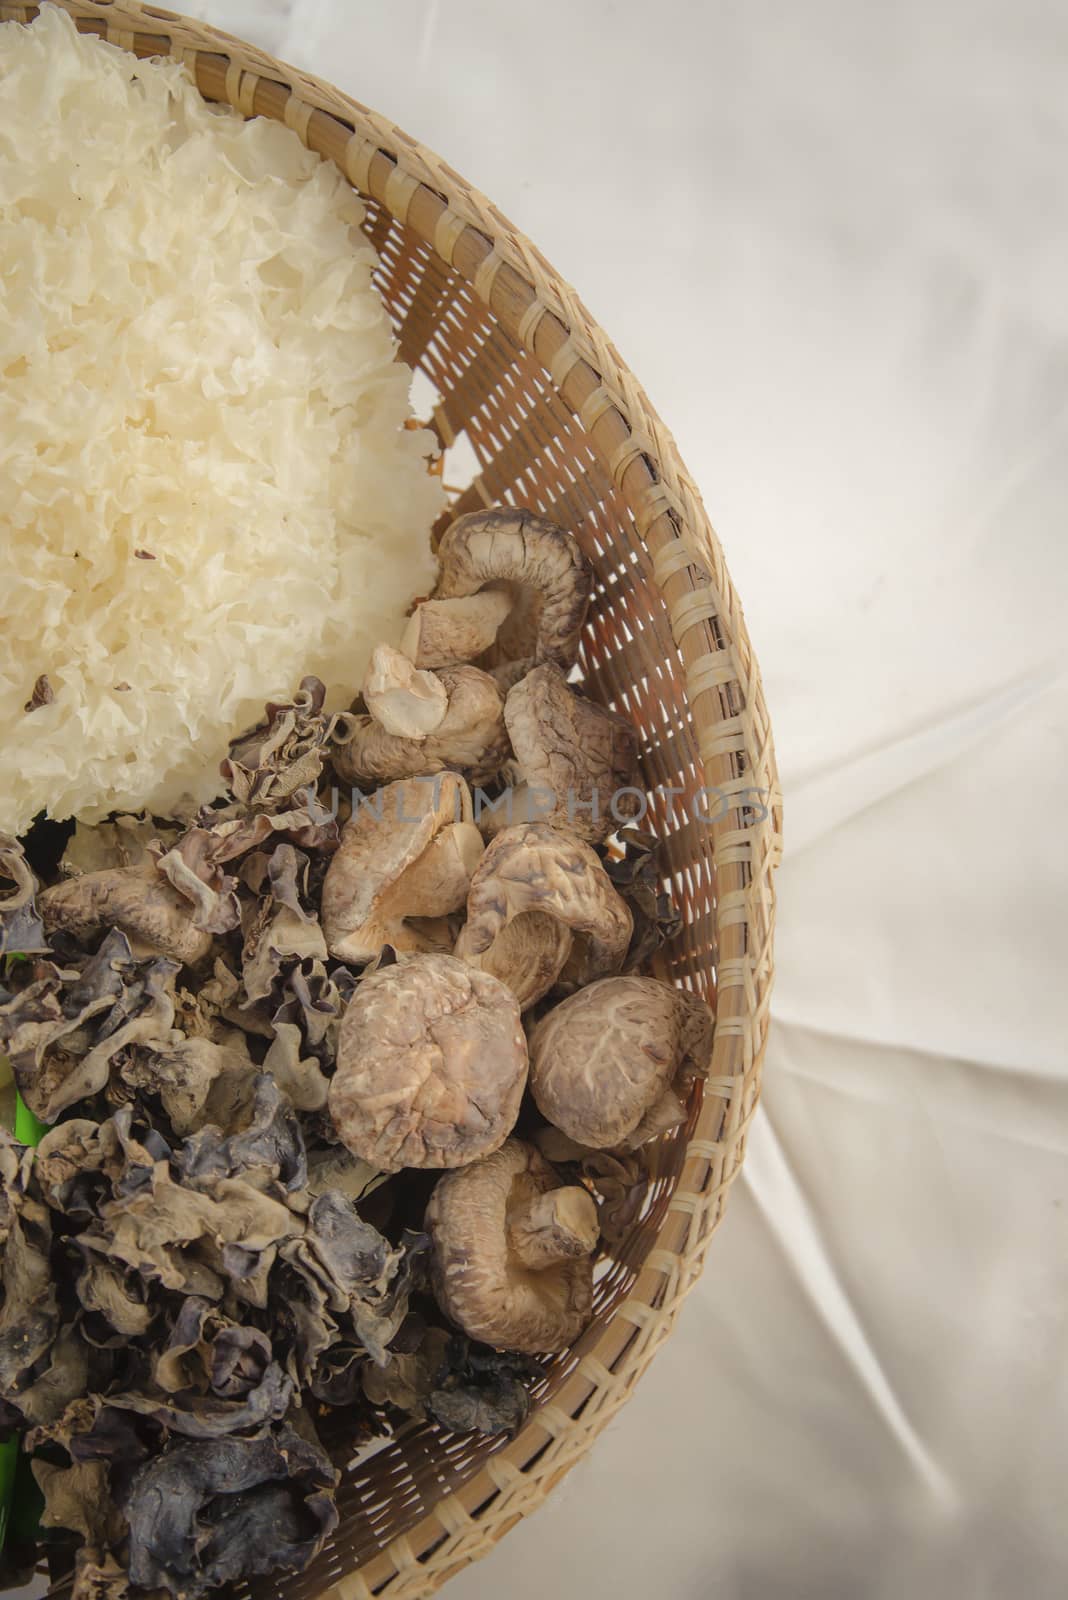 Dried shiitake mushroom by anatskwong